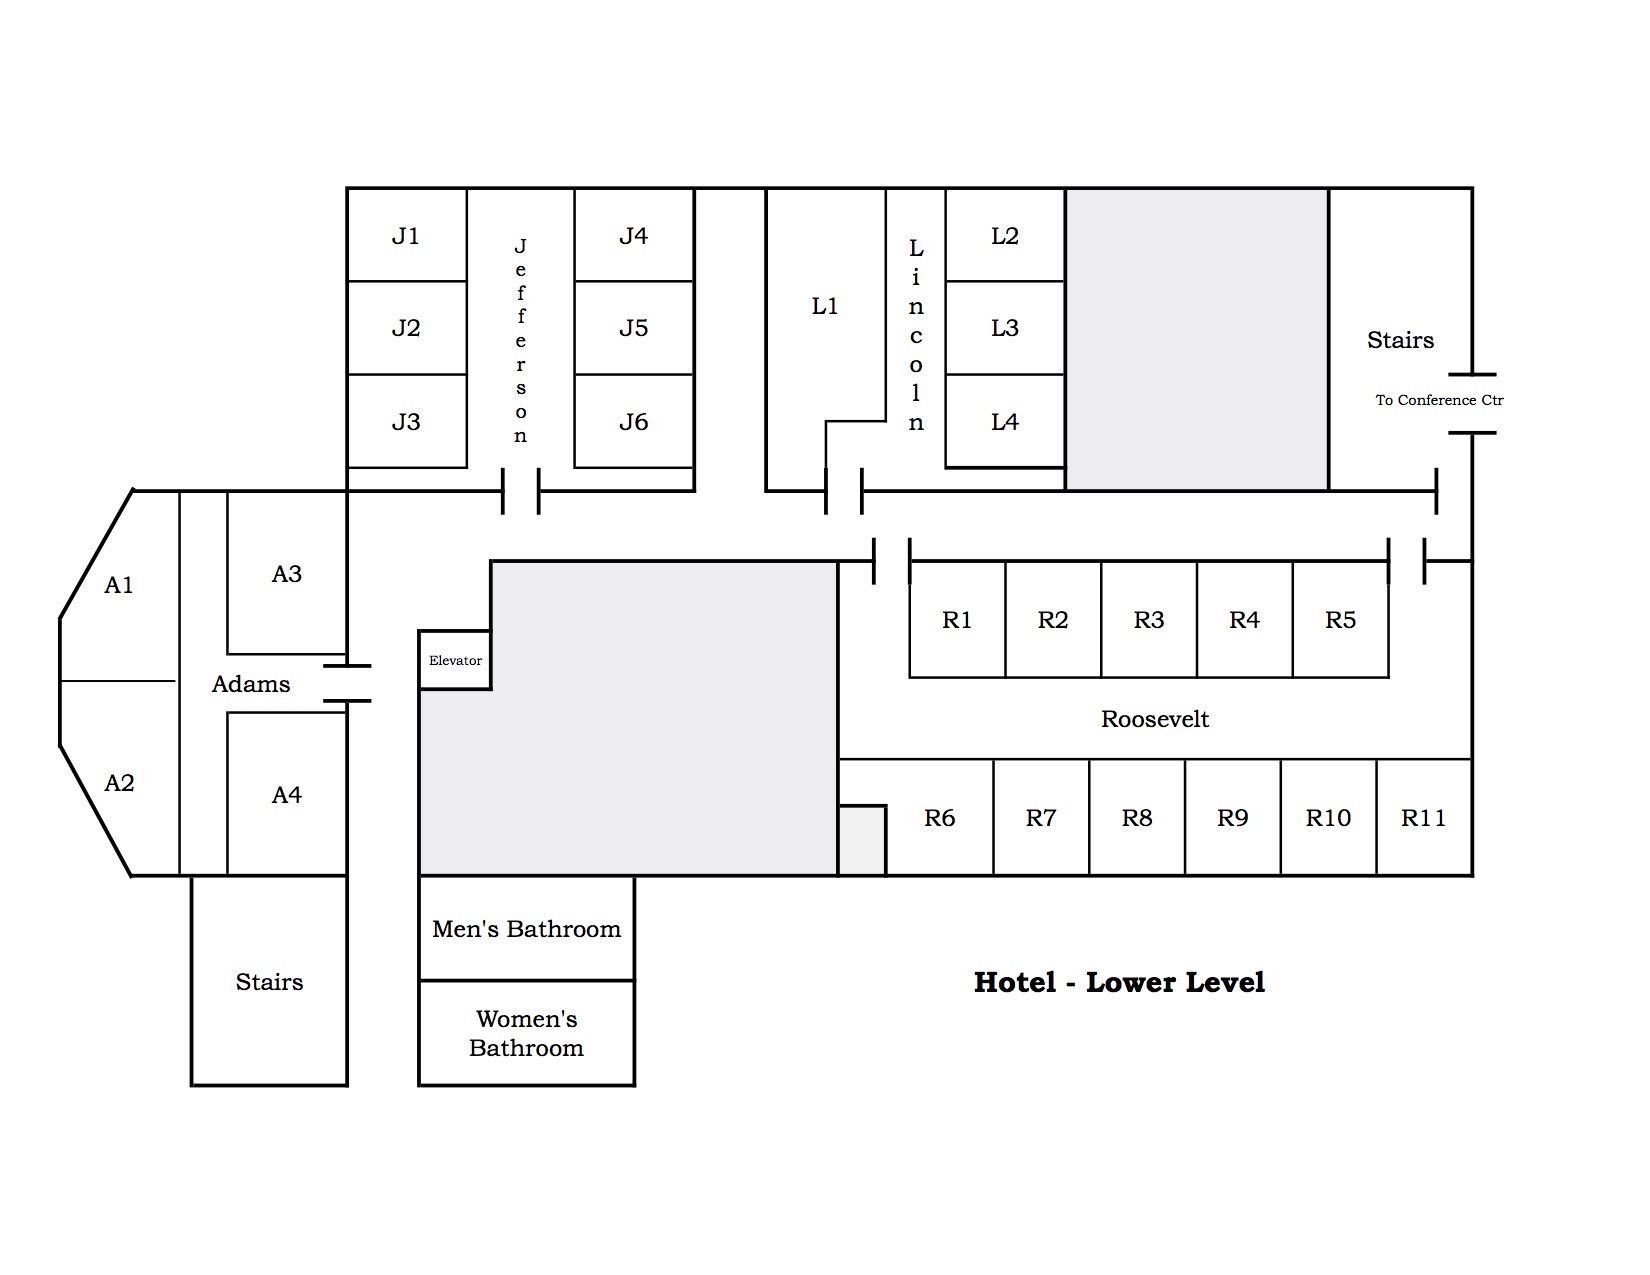 Vendor Maps2016 Hotel - LL.jpg